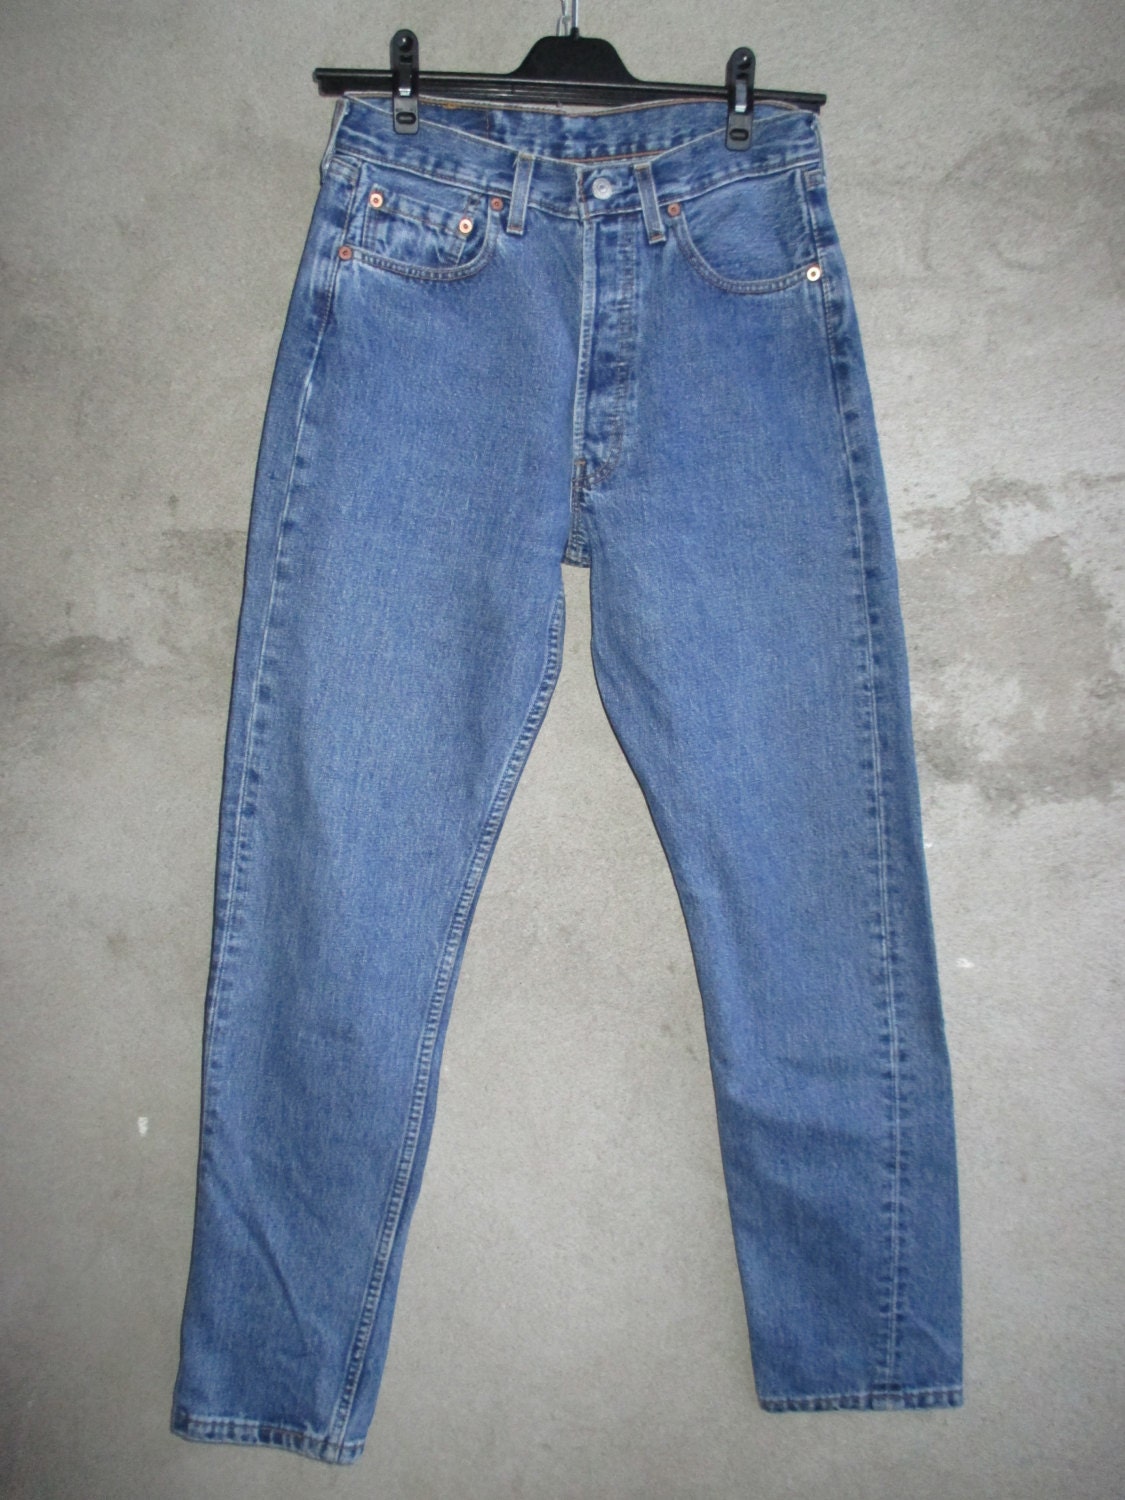 Men's vintage jeans 80's Vintage Levi Strauss 510 by EvoryMemory